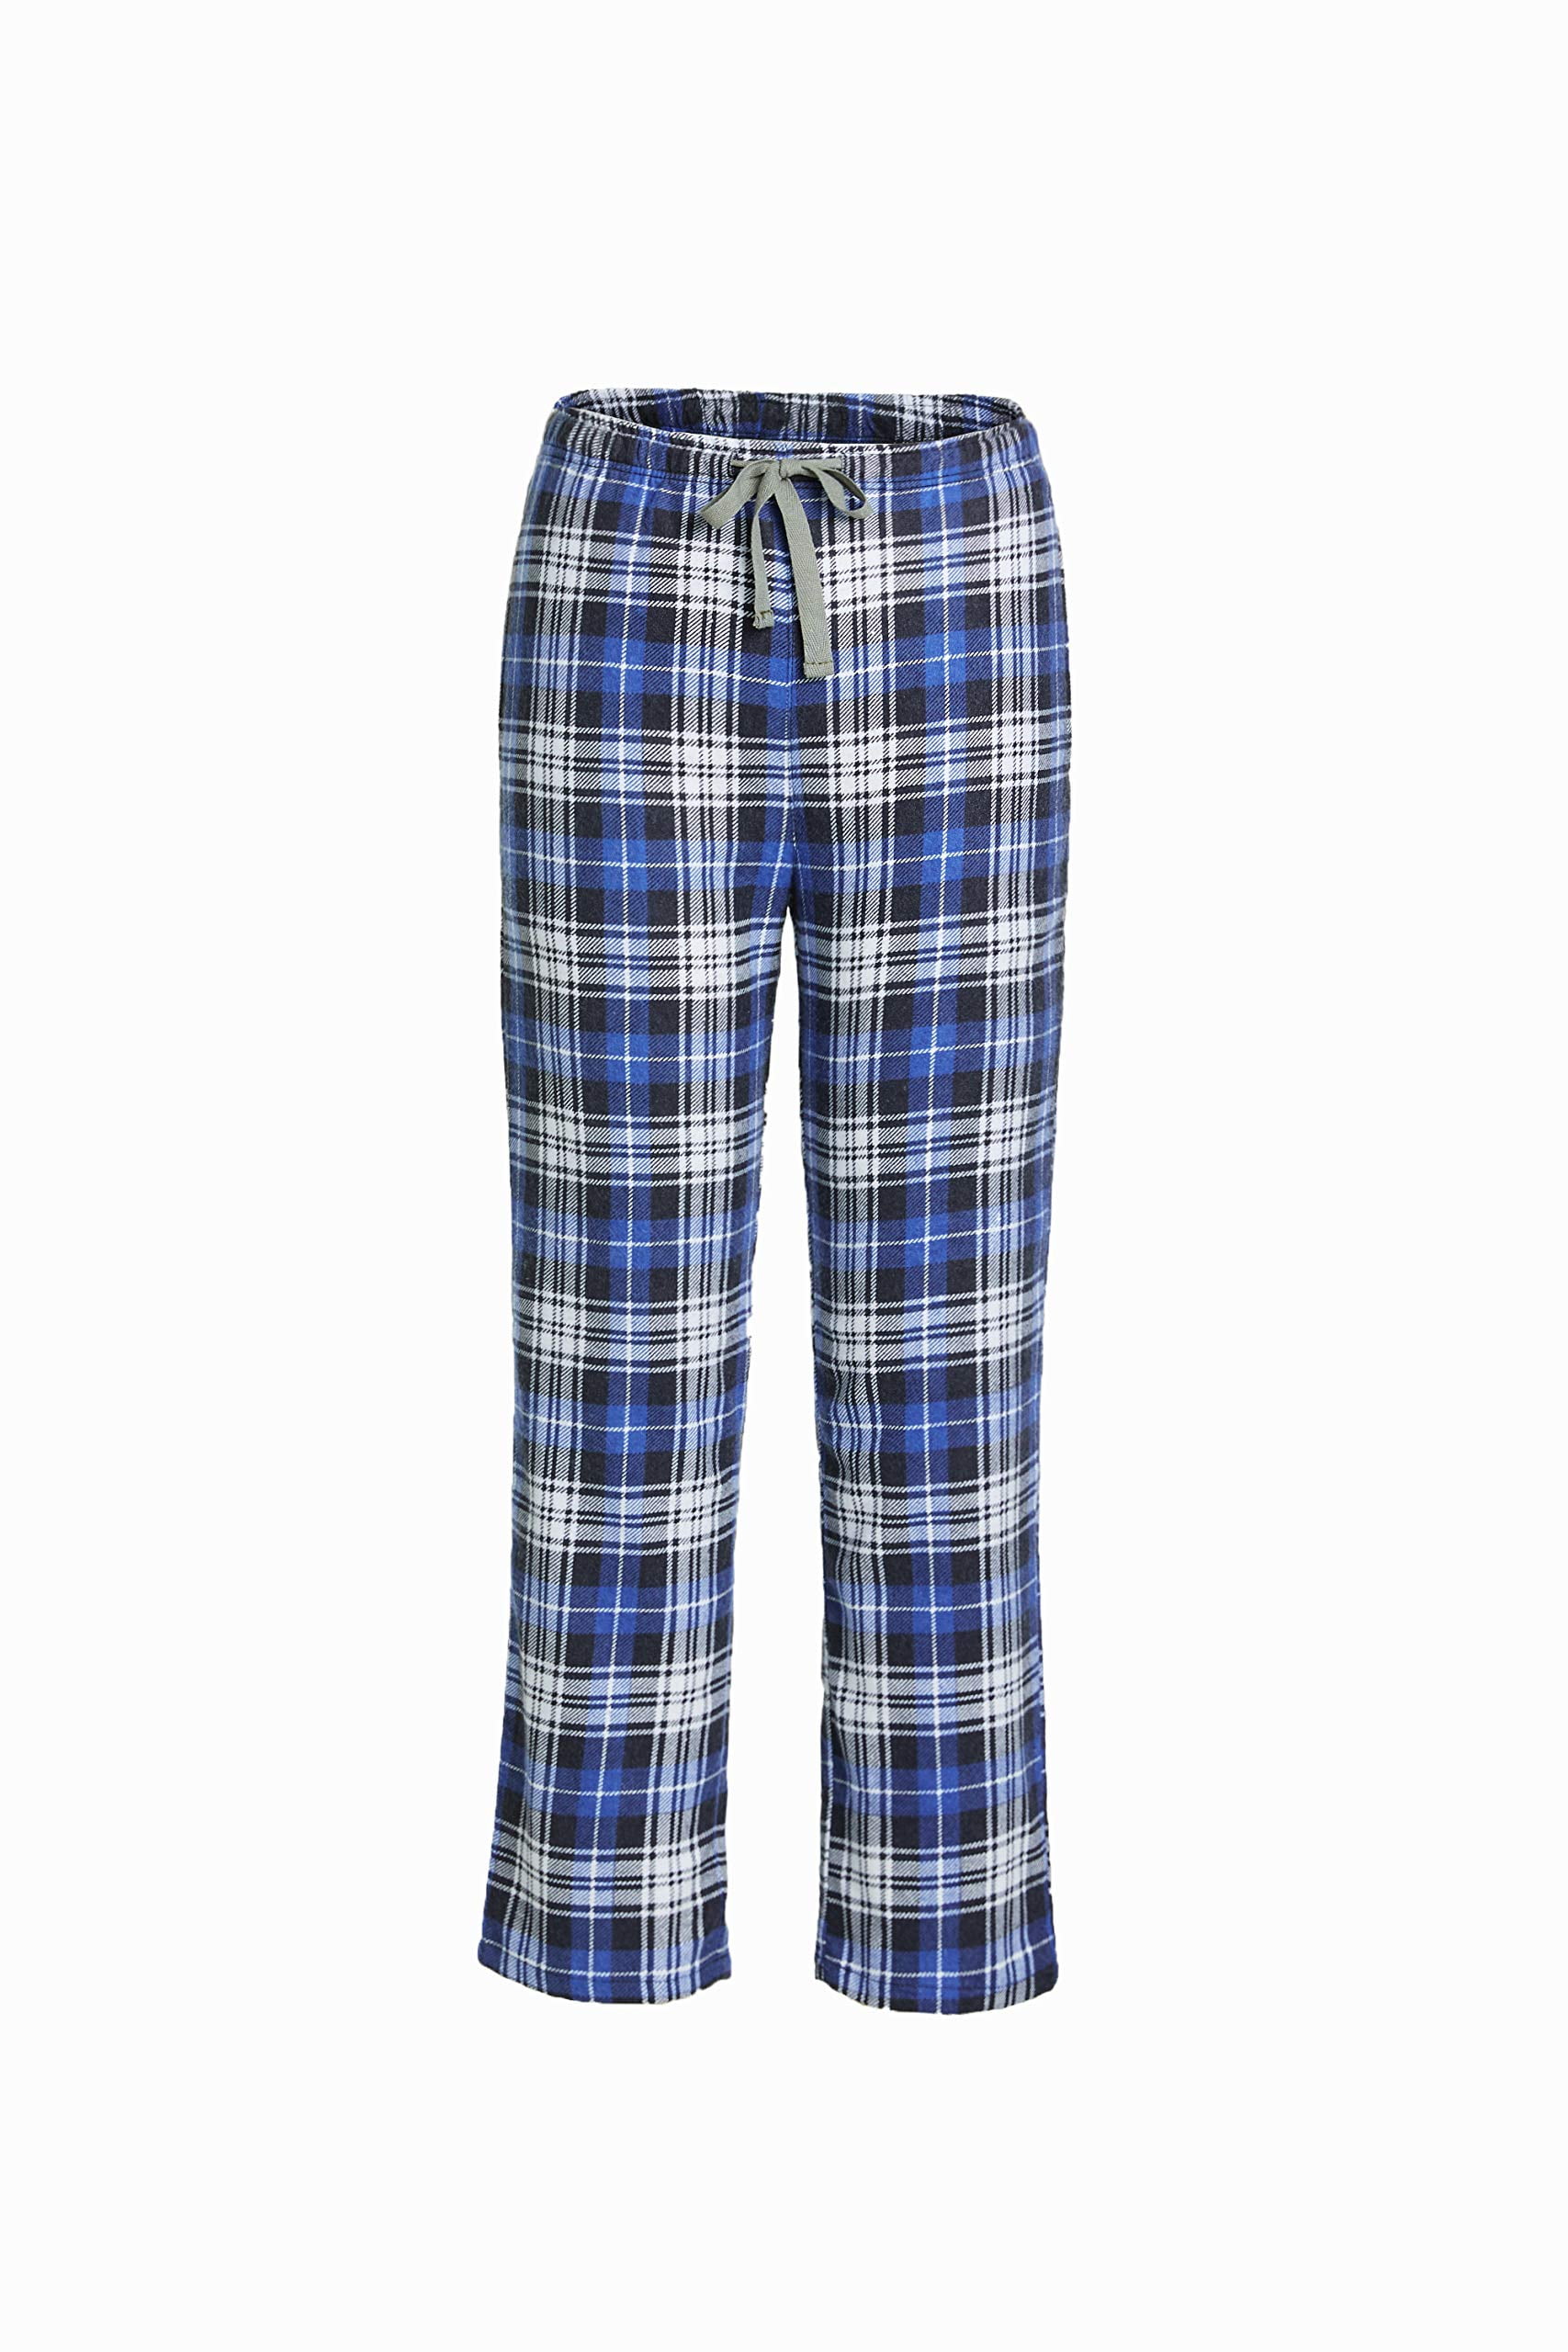 HiddenValor Big Boys Cotton Pajama Lounge Pants - Blue, Large 